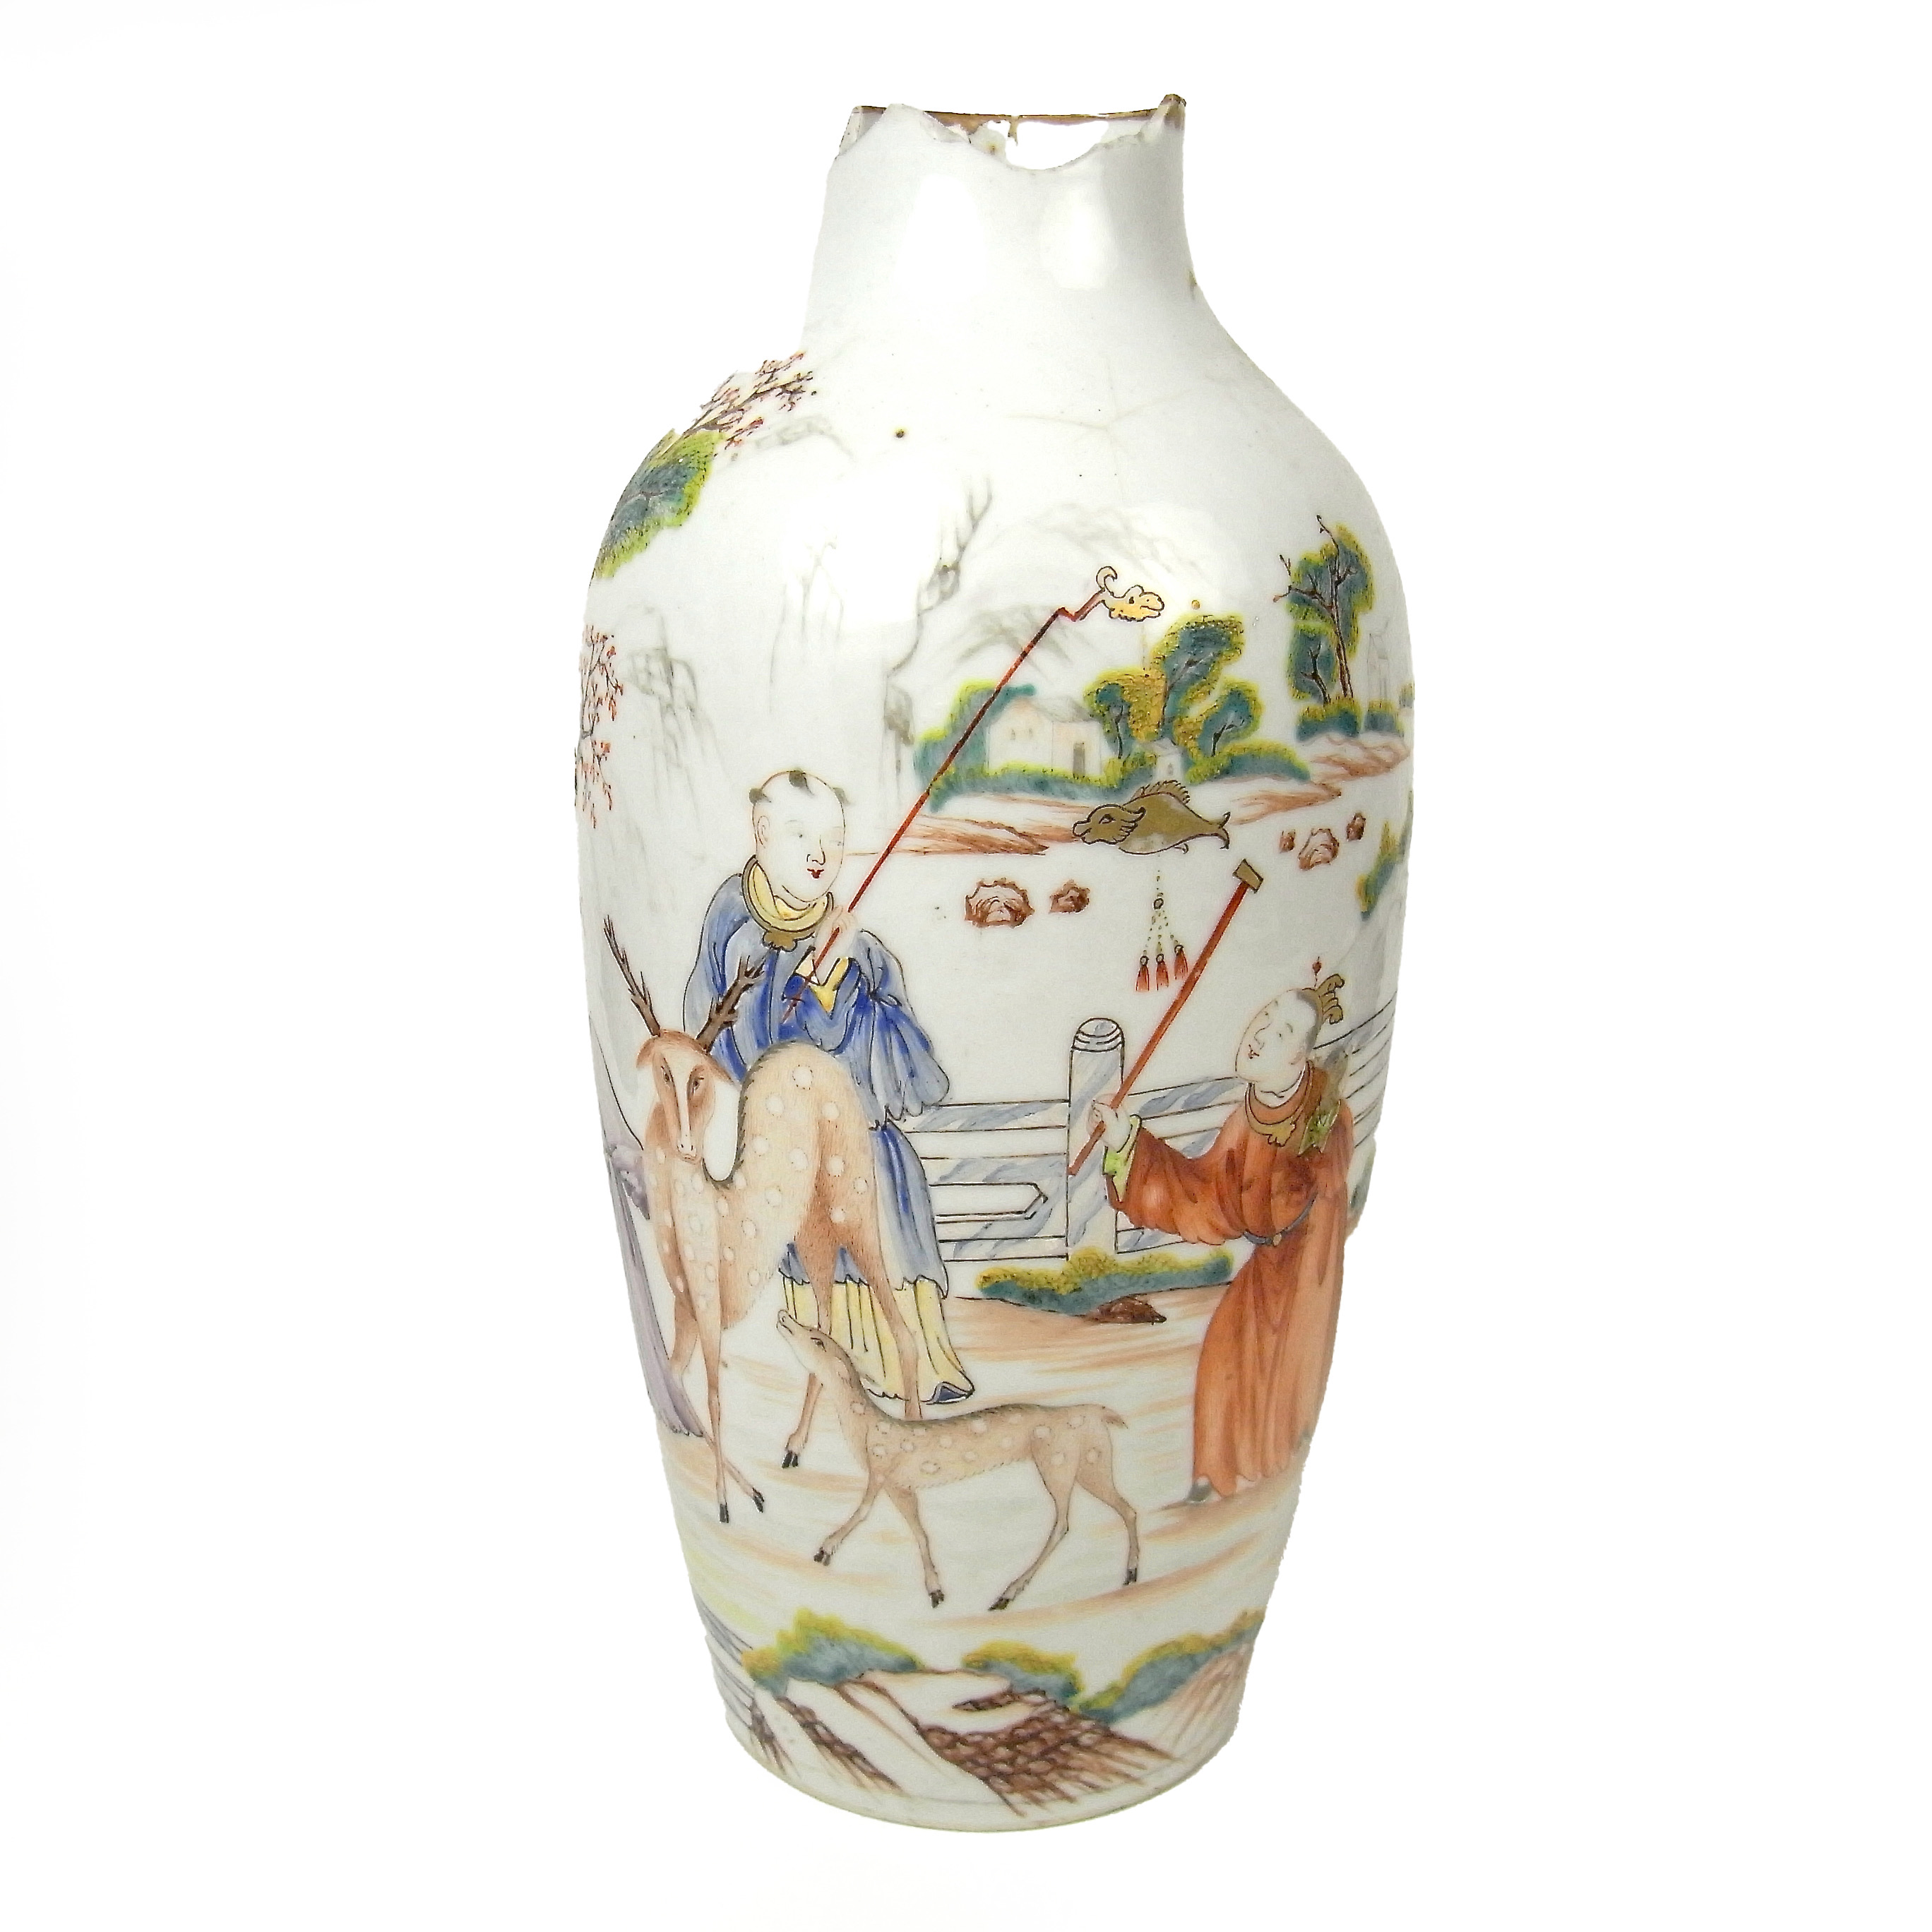 A Chinese enamelled porcelain vase, 18th century - Image 2 of 2